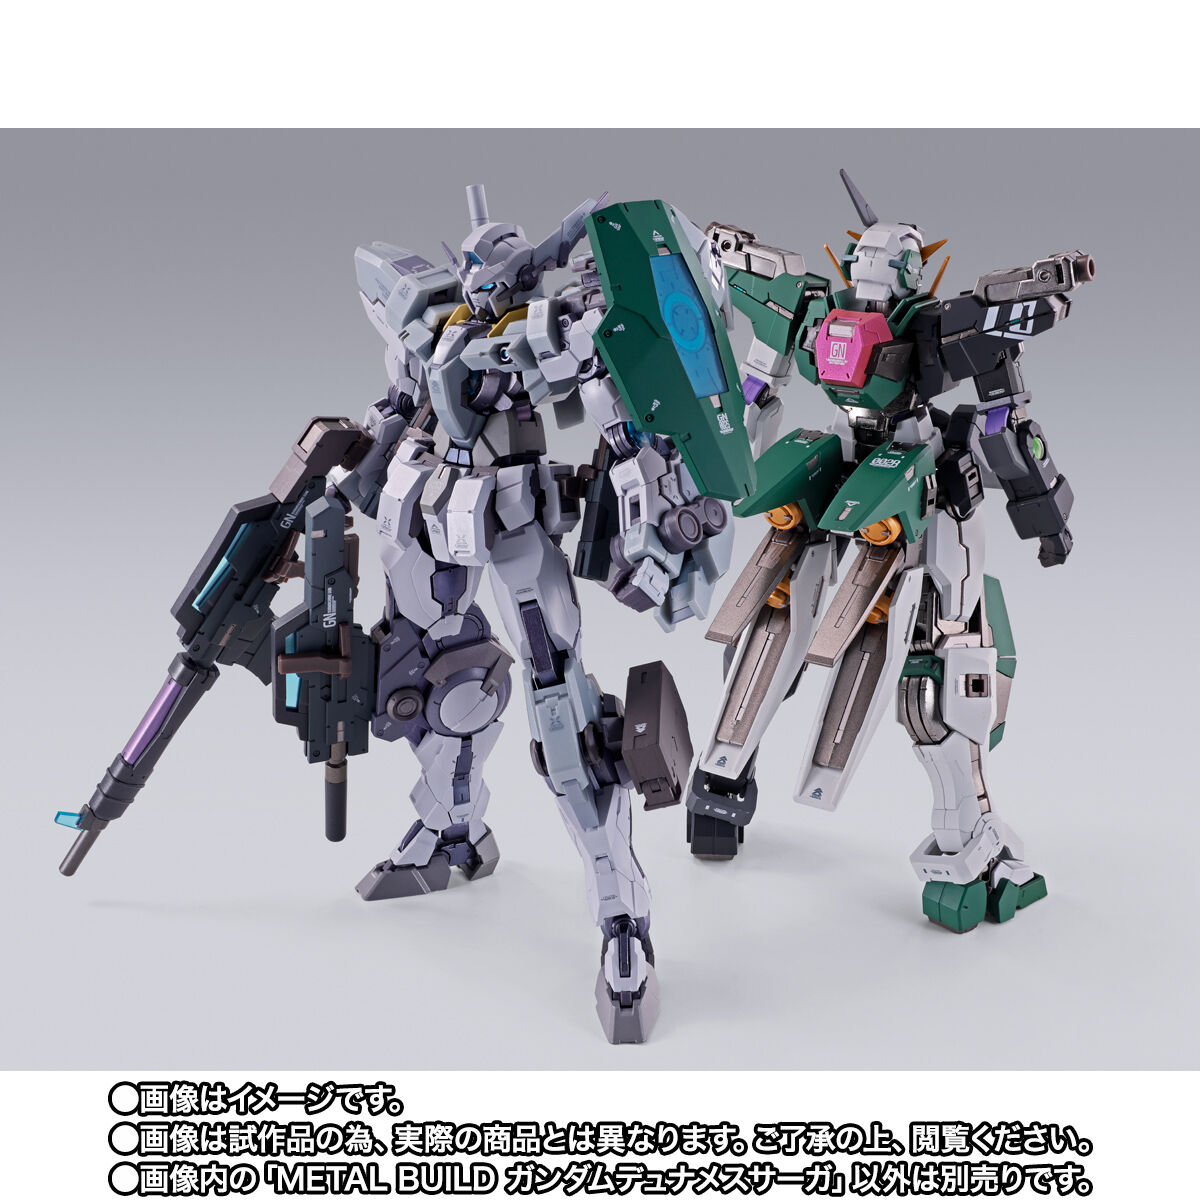 Metal Build GN-002S Gundam Dynames SAGA(Special Assault Gundam Arms)